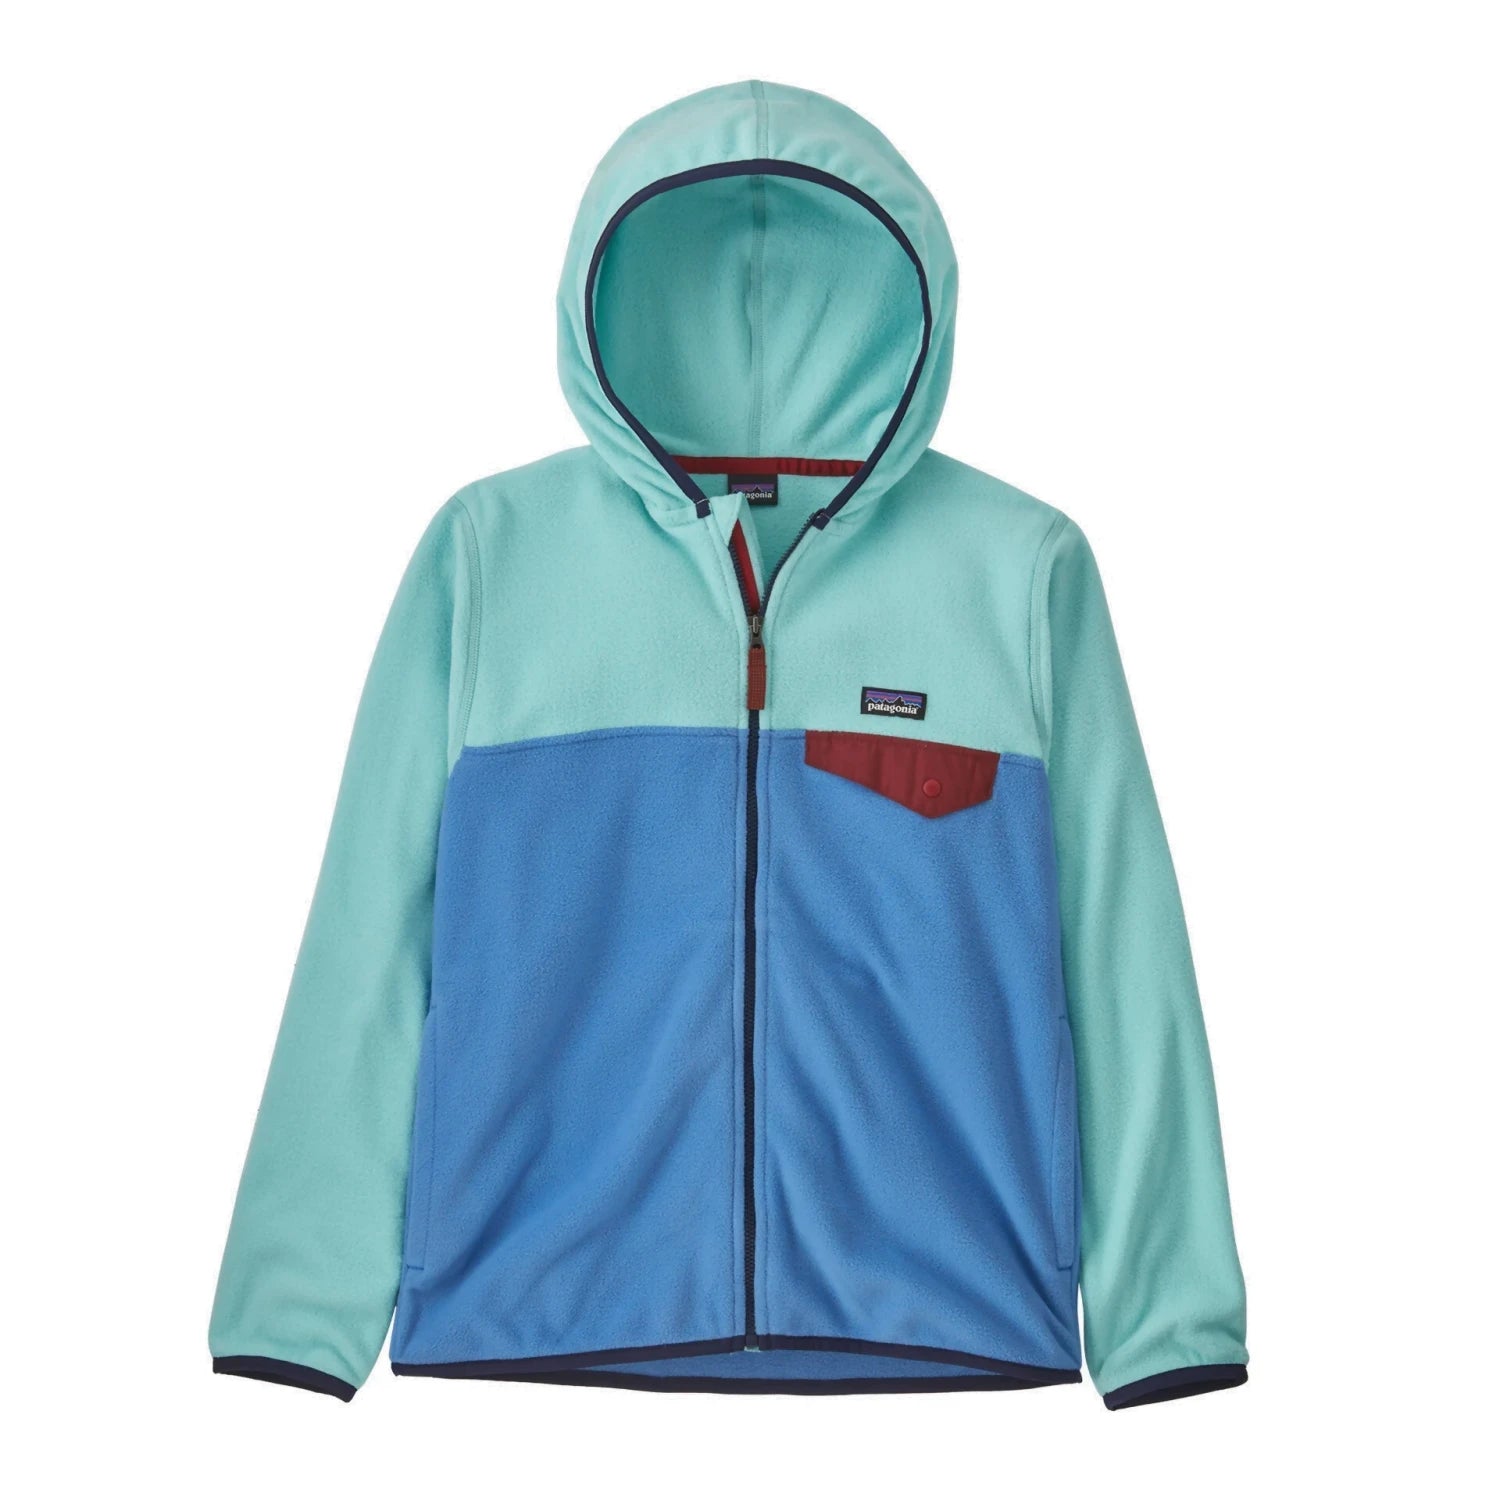 Patagonia Kids' Micro D® Snap-T® Fleece Jacket in bluebird